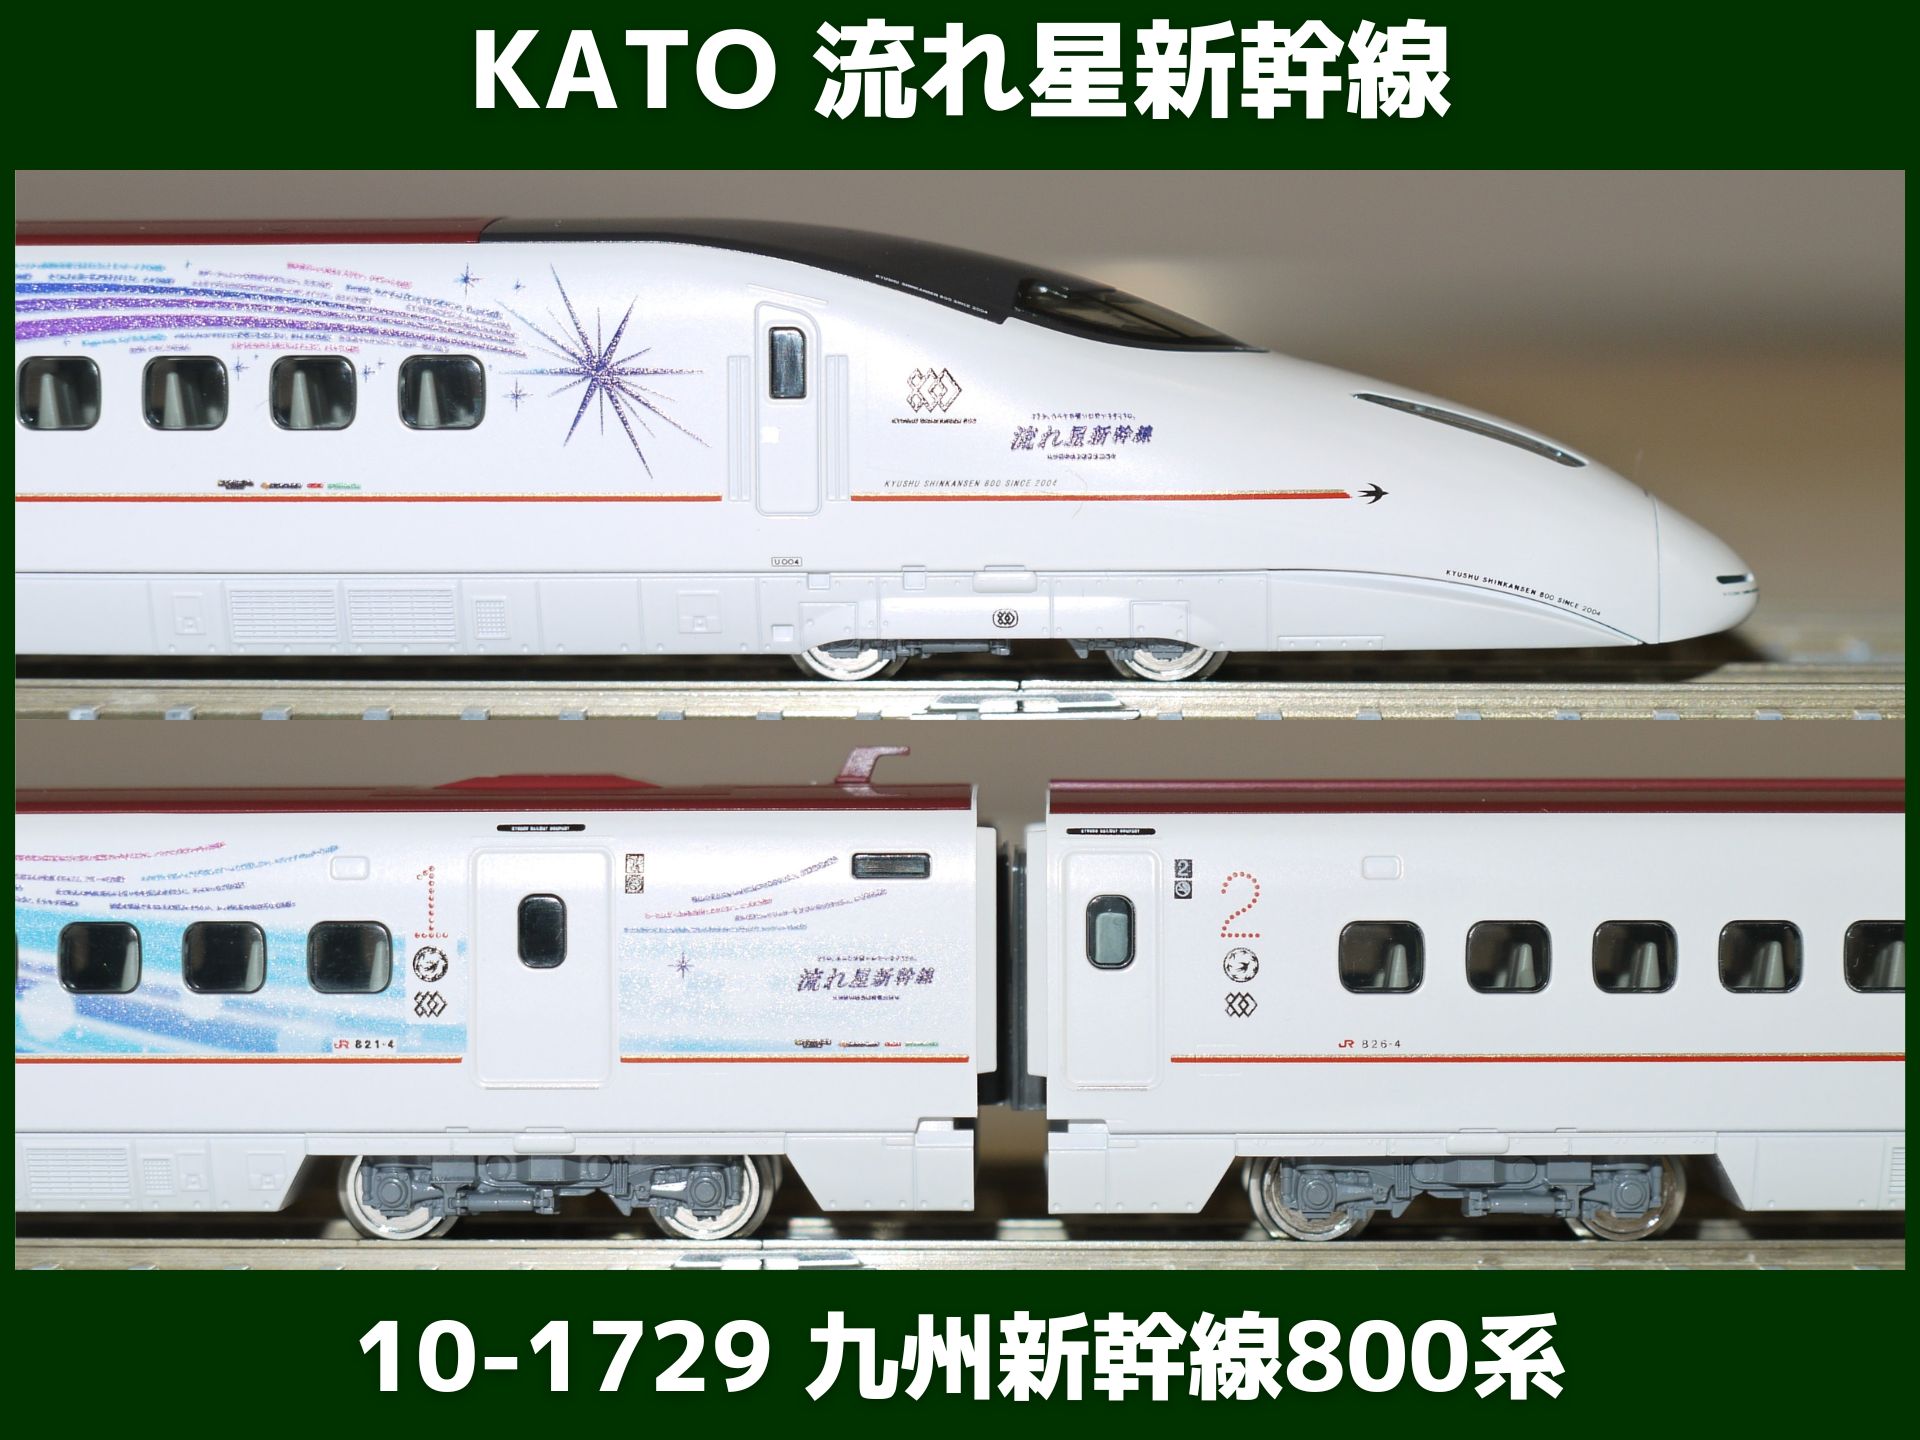 鉄道模型KATO 10-1729 九州新幹線 800系 「流れ星新幹線」6両セット 